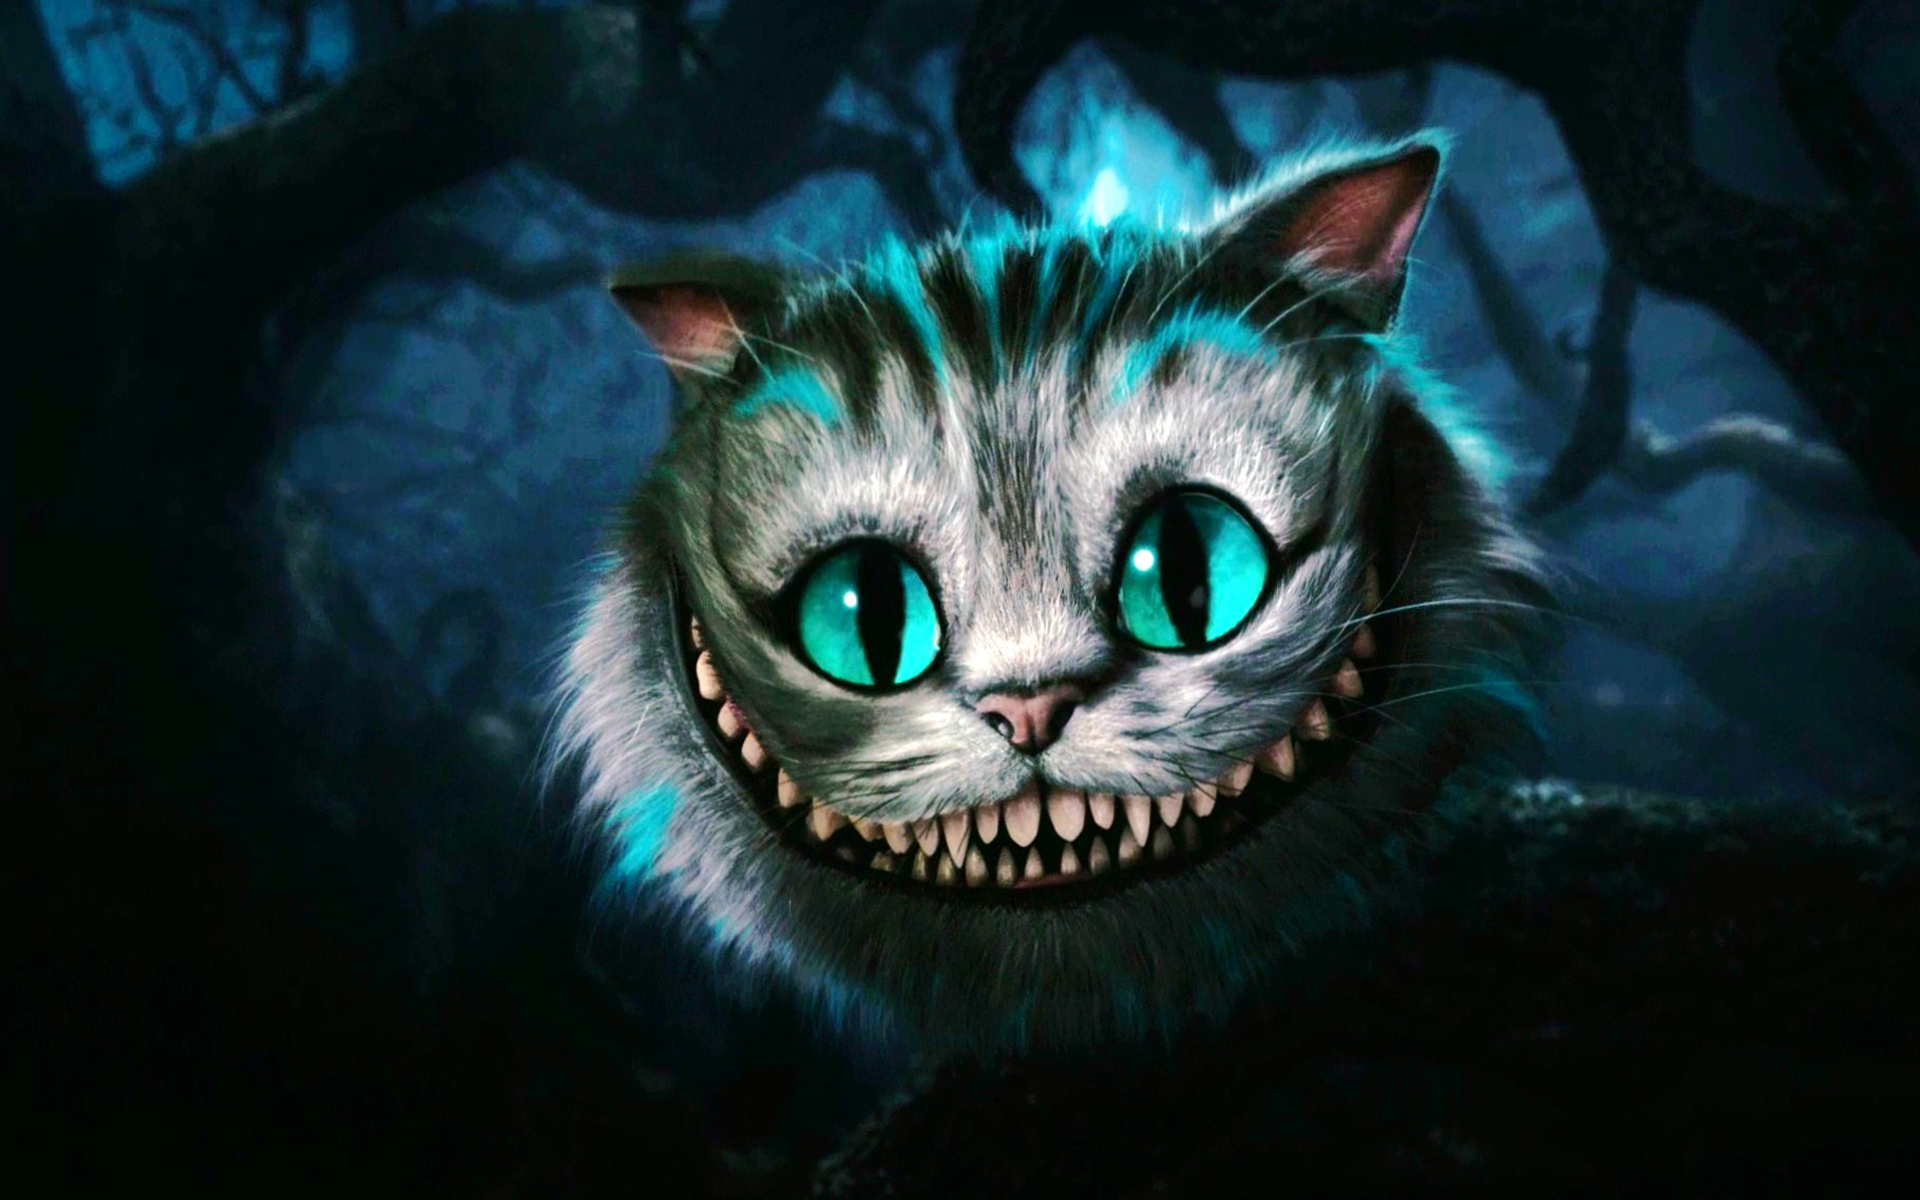 cheshire cat alice in wonderla by wallybescotty on DeviantArt